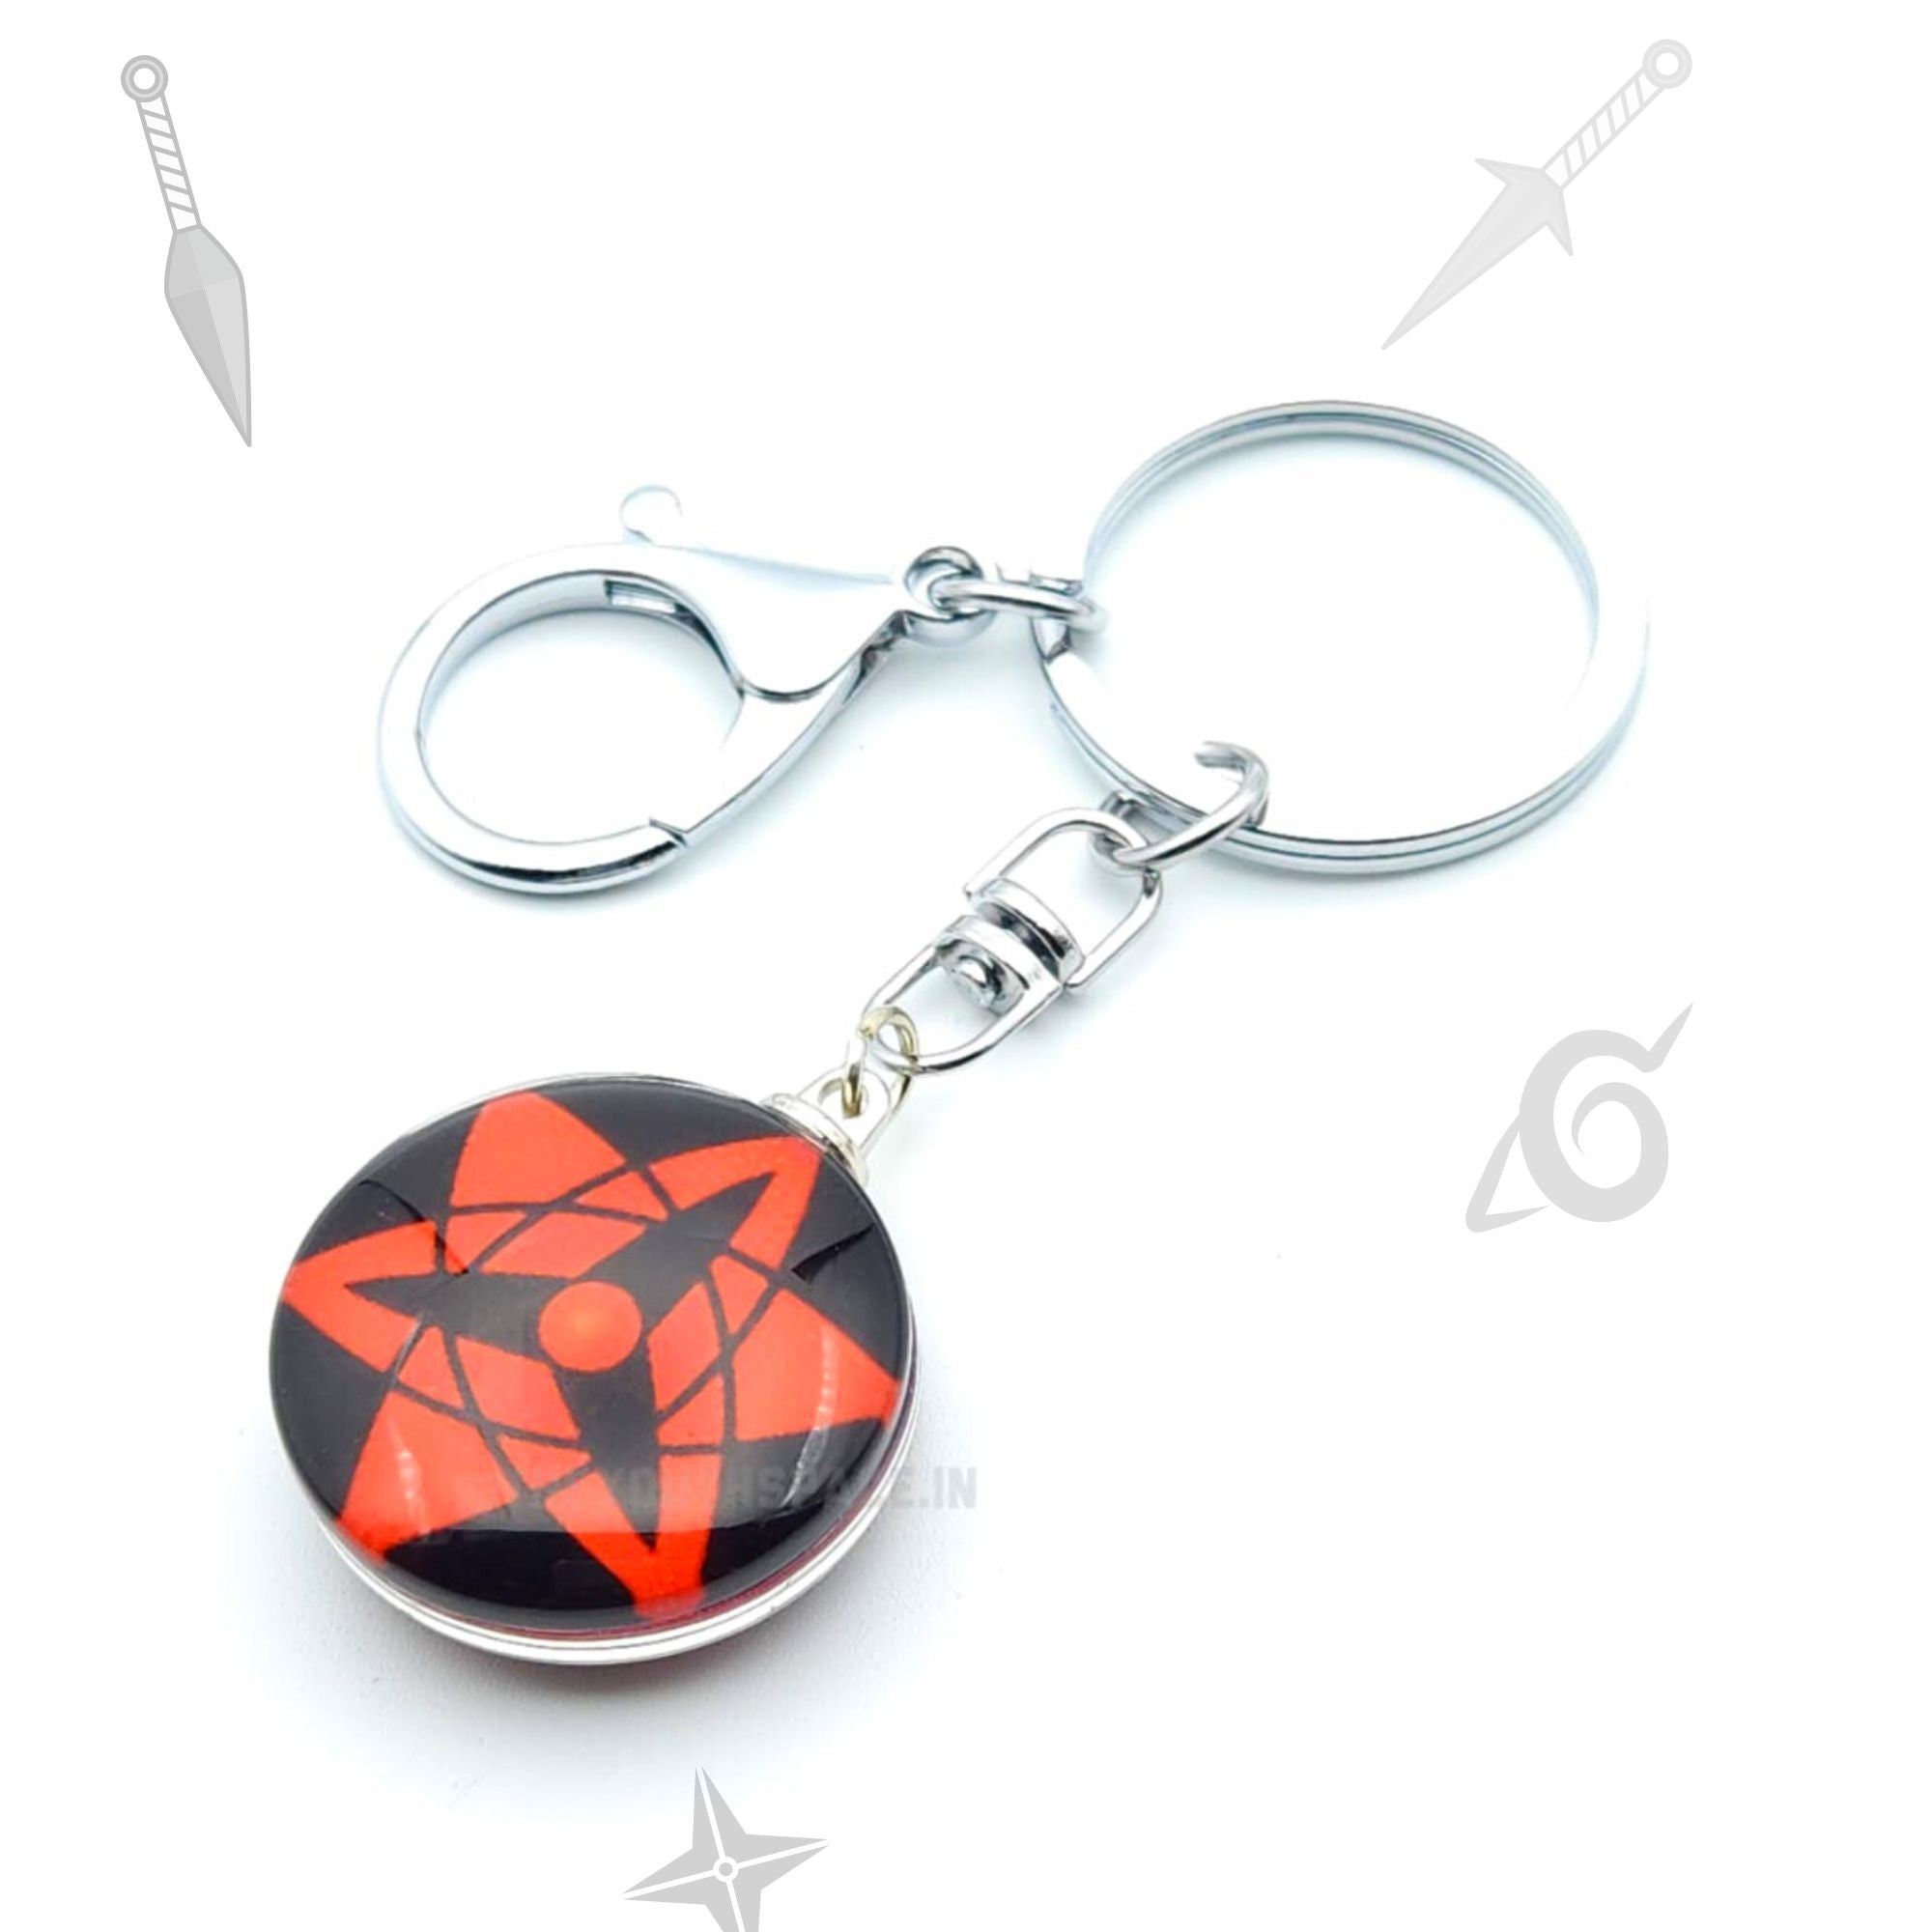 Sasuke's sharingan keychain